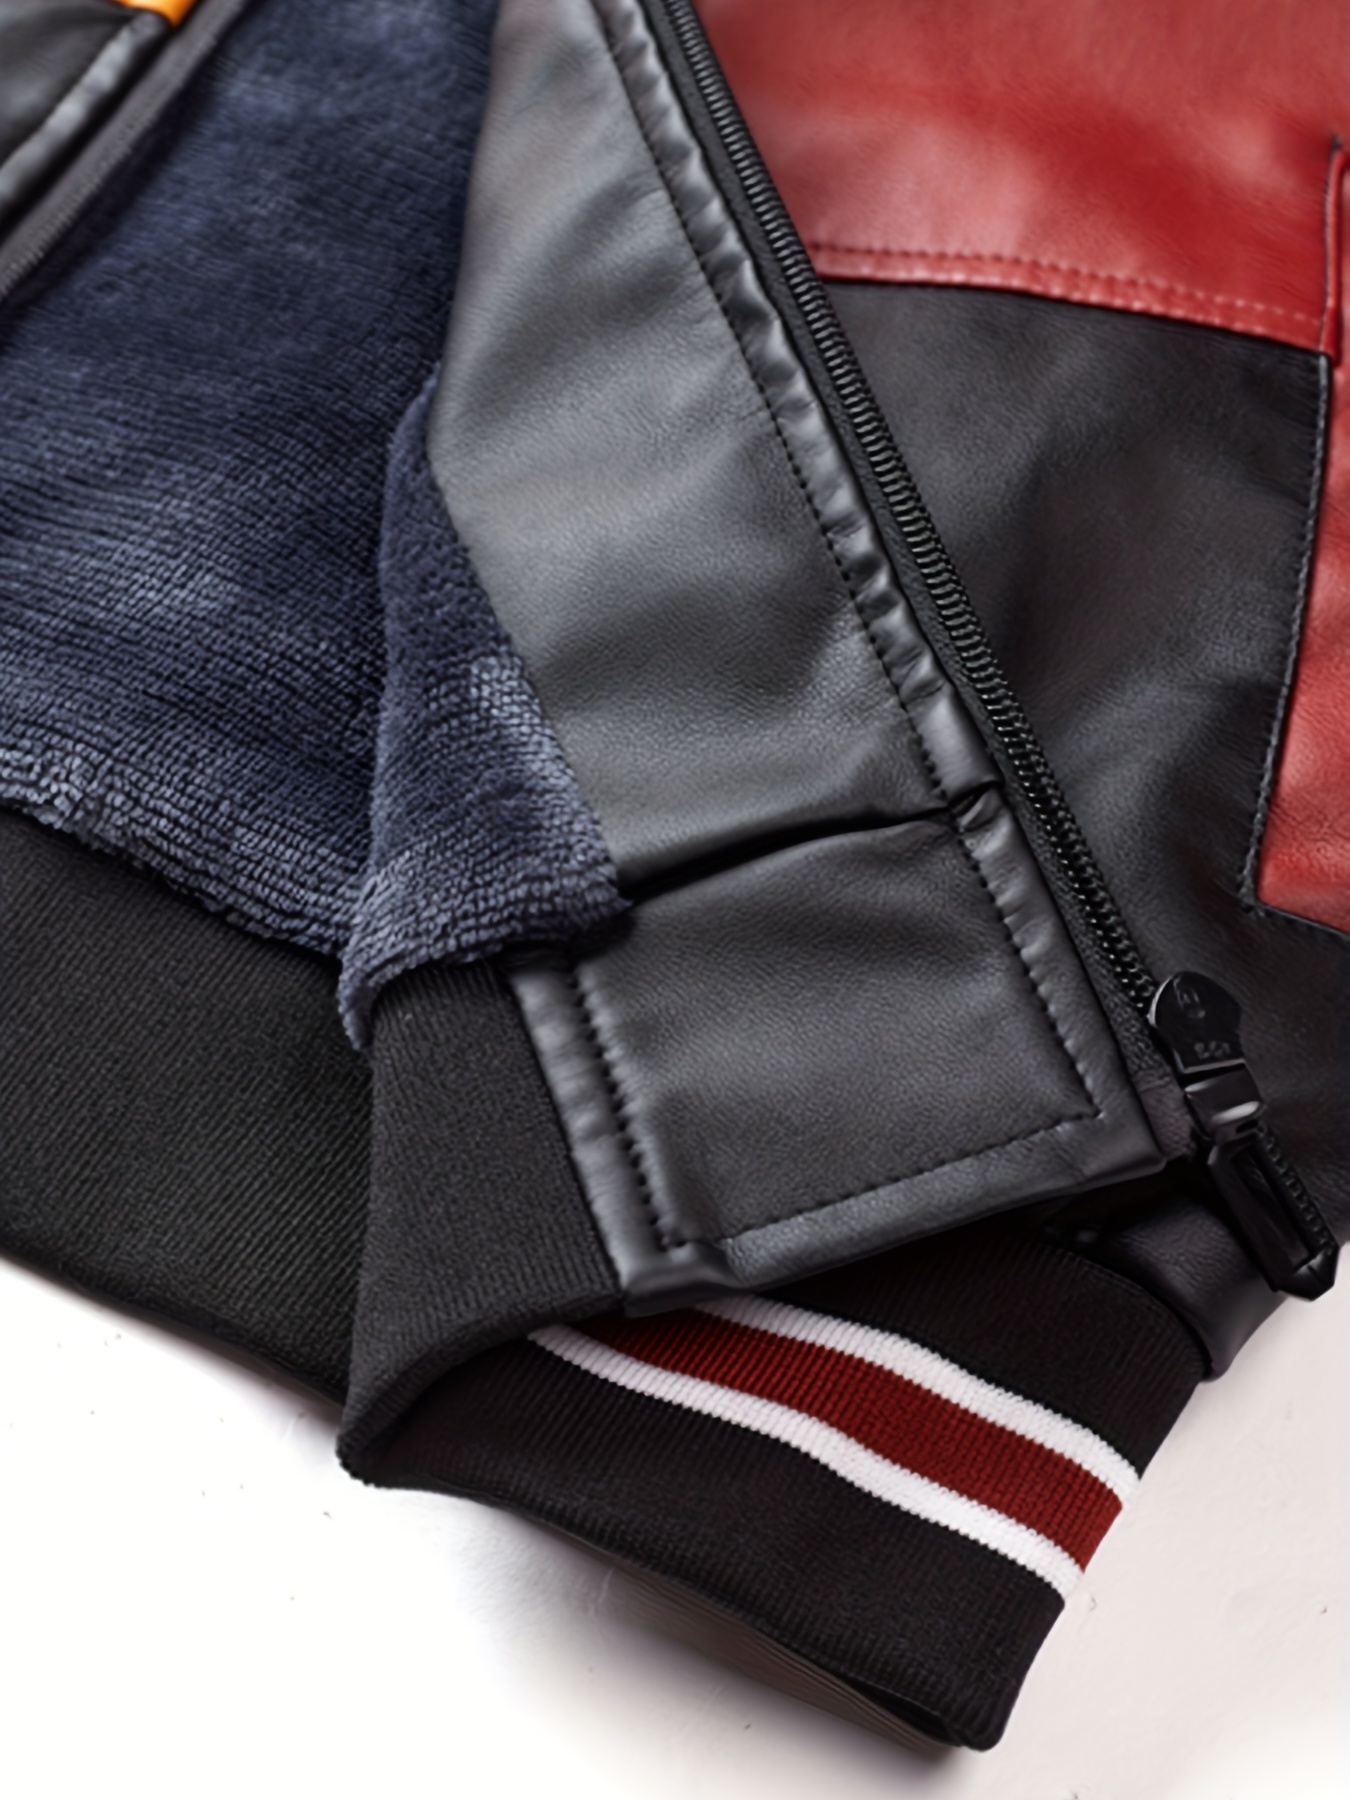 Classy Leather Bags Varsity Letterman Jacket